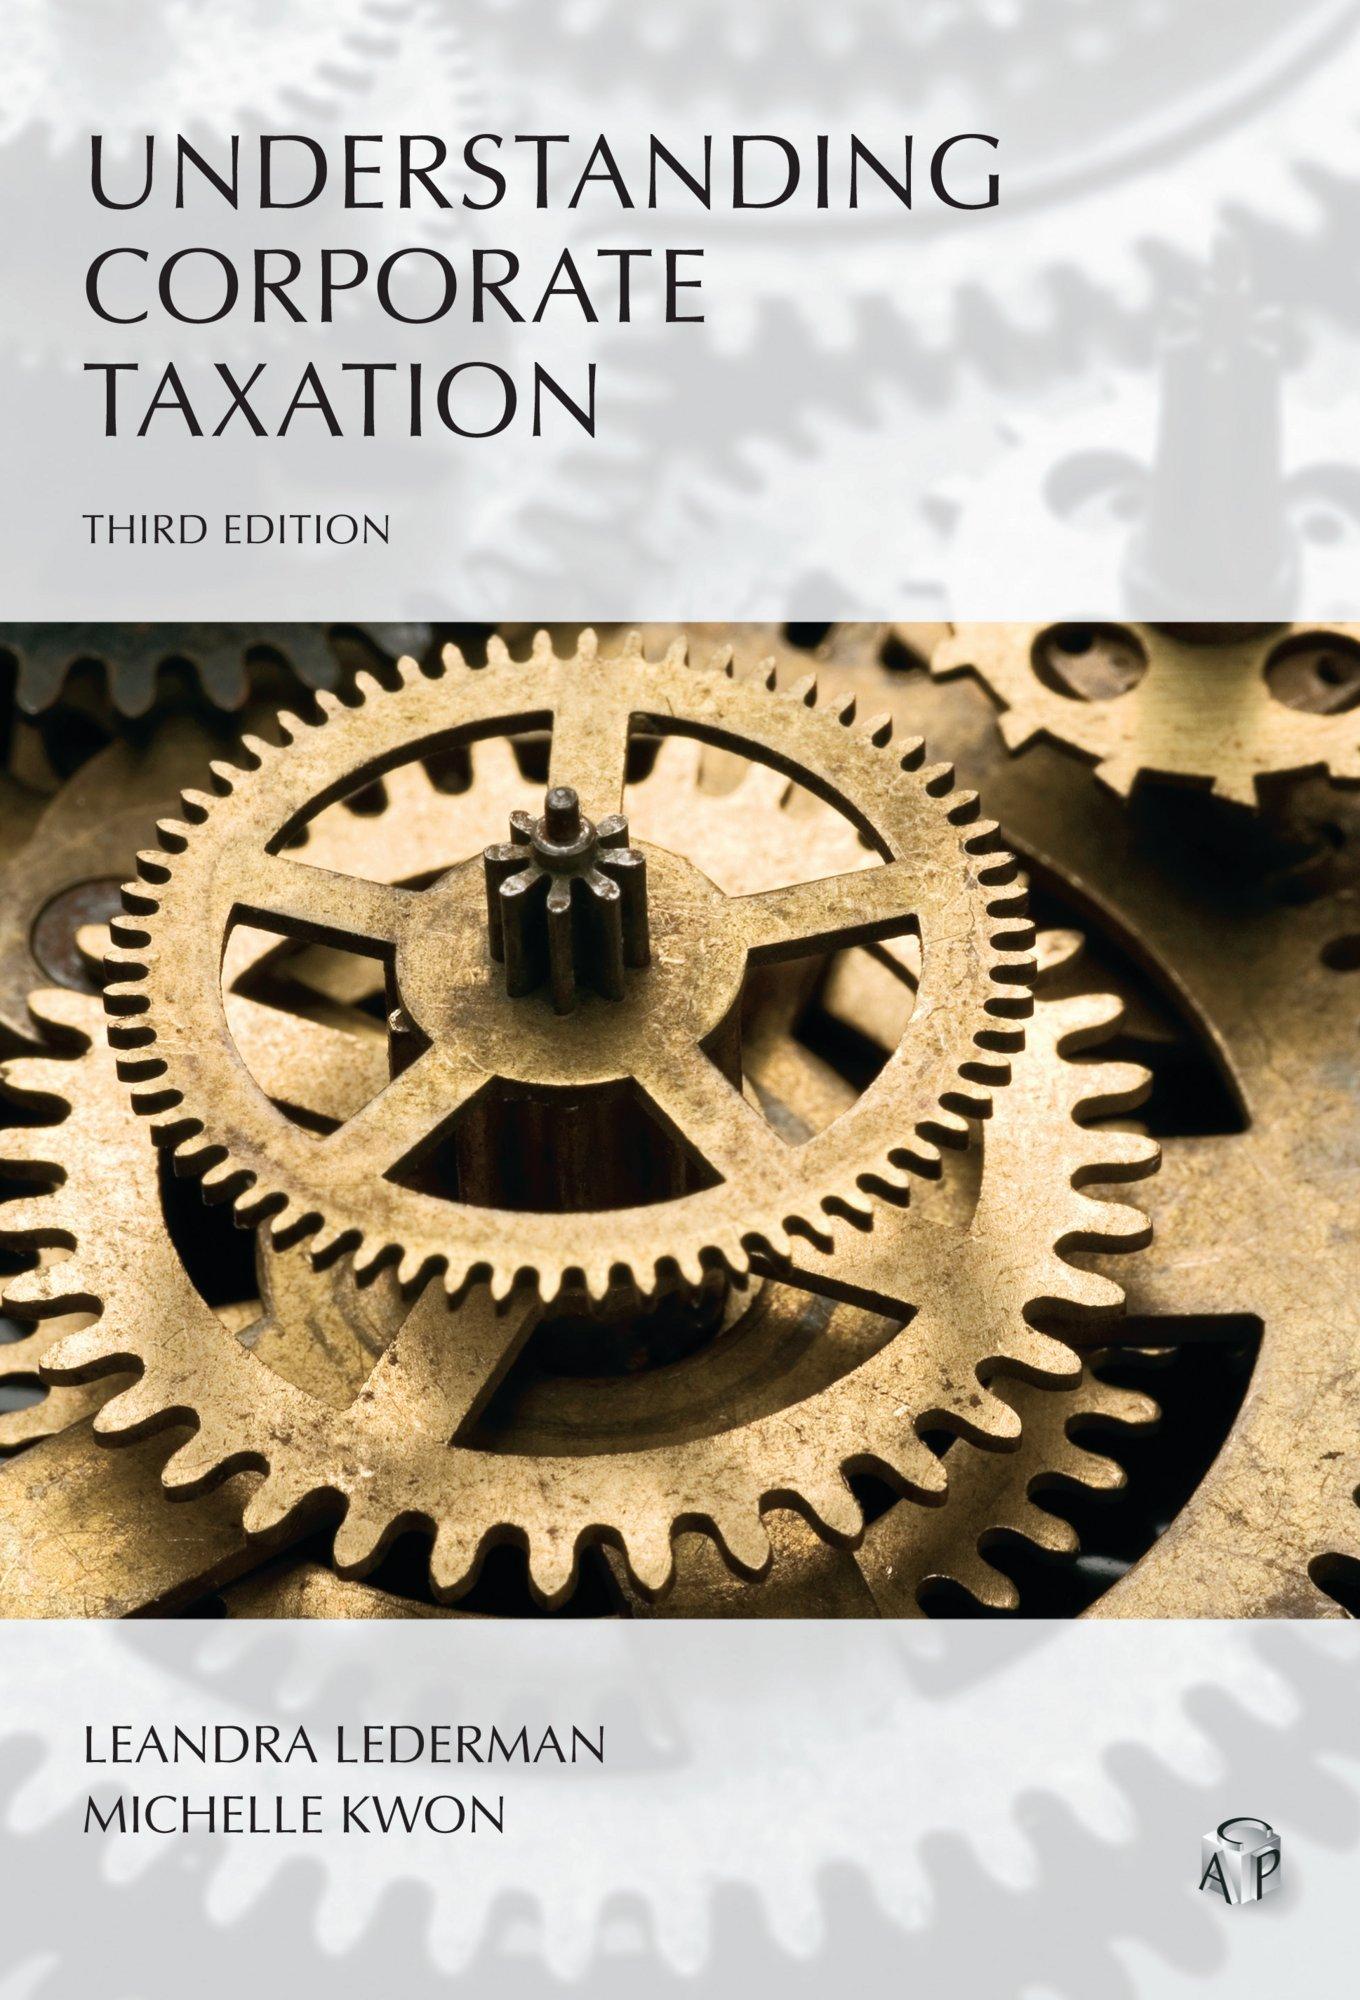 understanding corporate taxation 3rd edition leandra lederman, michelle kwon 1632833948, 9781632833945